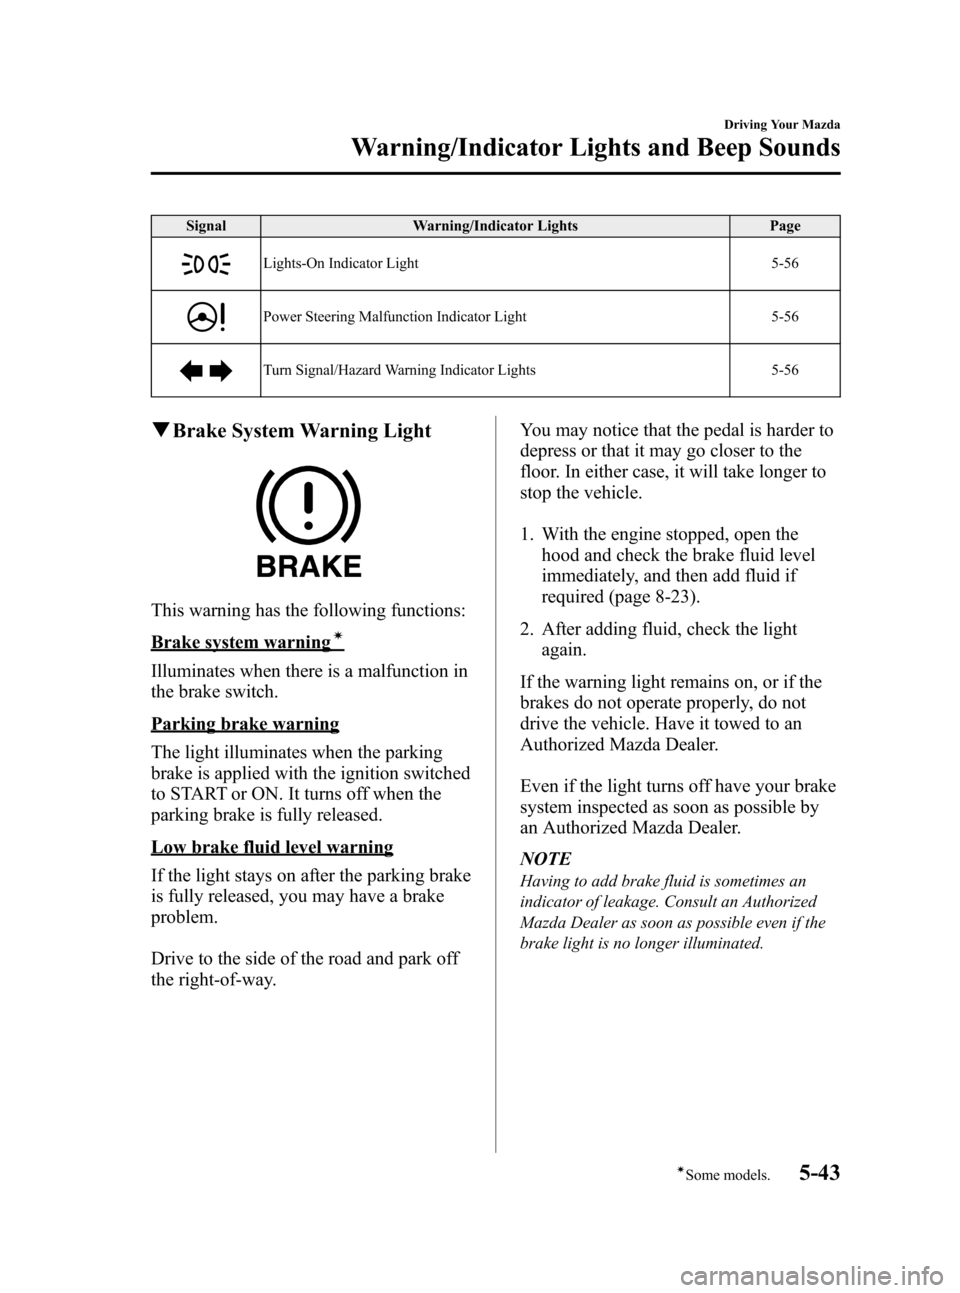 MAZDA MODEL 3 HATCHBACK 2011  Owners Manual (in English) Black plate (203,1)
SignalWarning/Indicator Lights Page
Lights-On Indicator Light 5-56
Power Steering Malfunction Indicator Light5-56
Turn Signal/Hazard Warning Indicator Lights5-56
qBrake System Warn